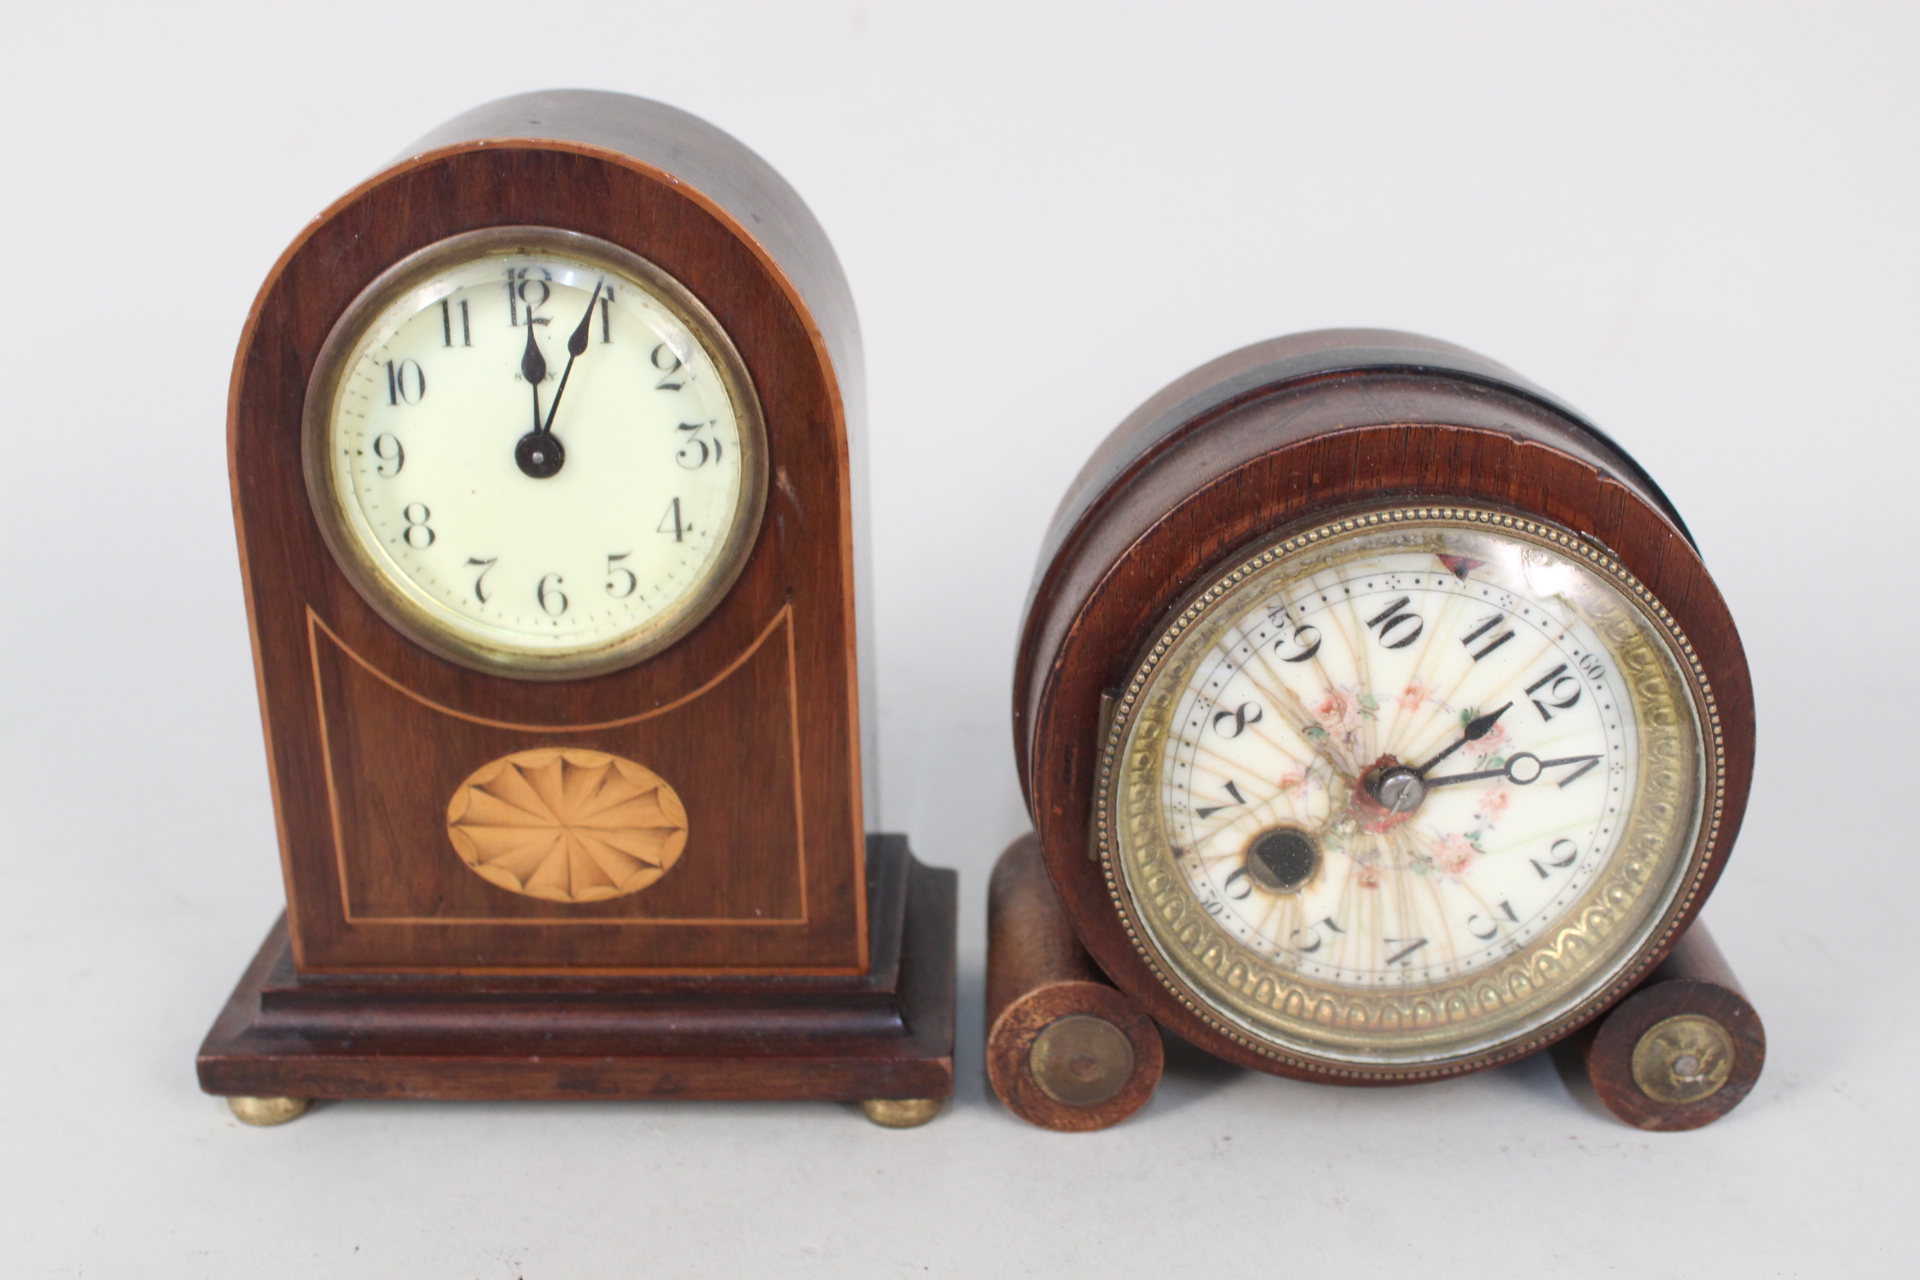 Edwardian inlaid plus one other mantel clock